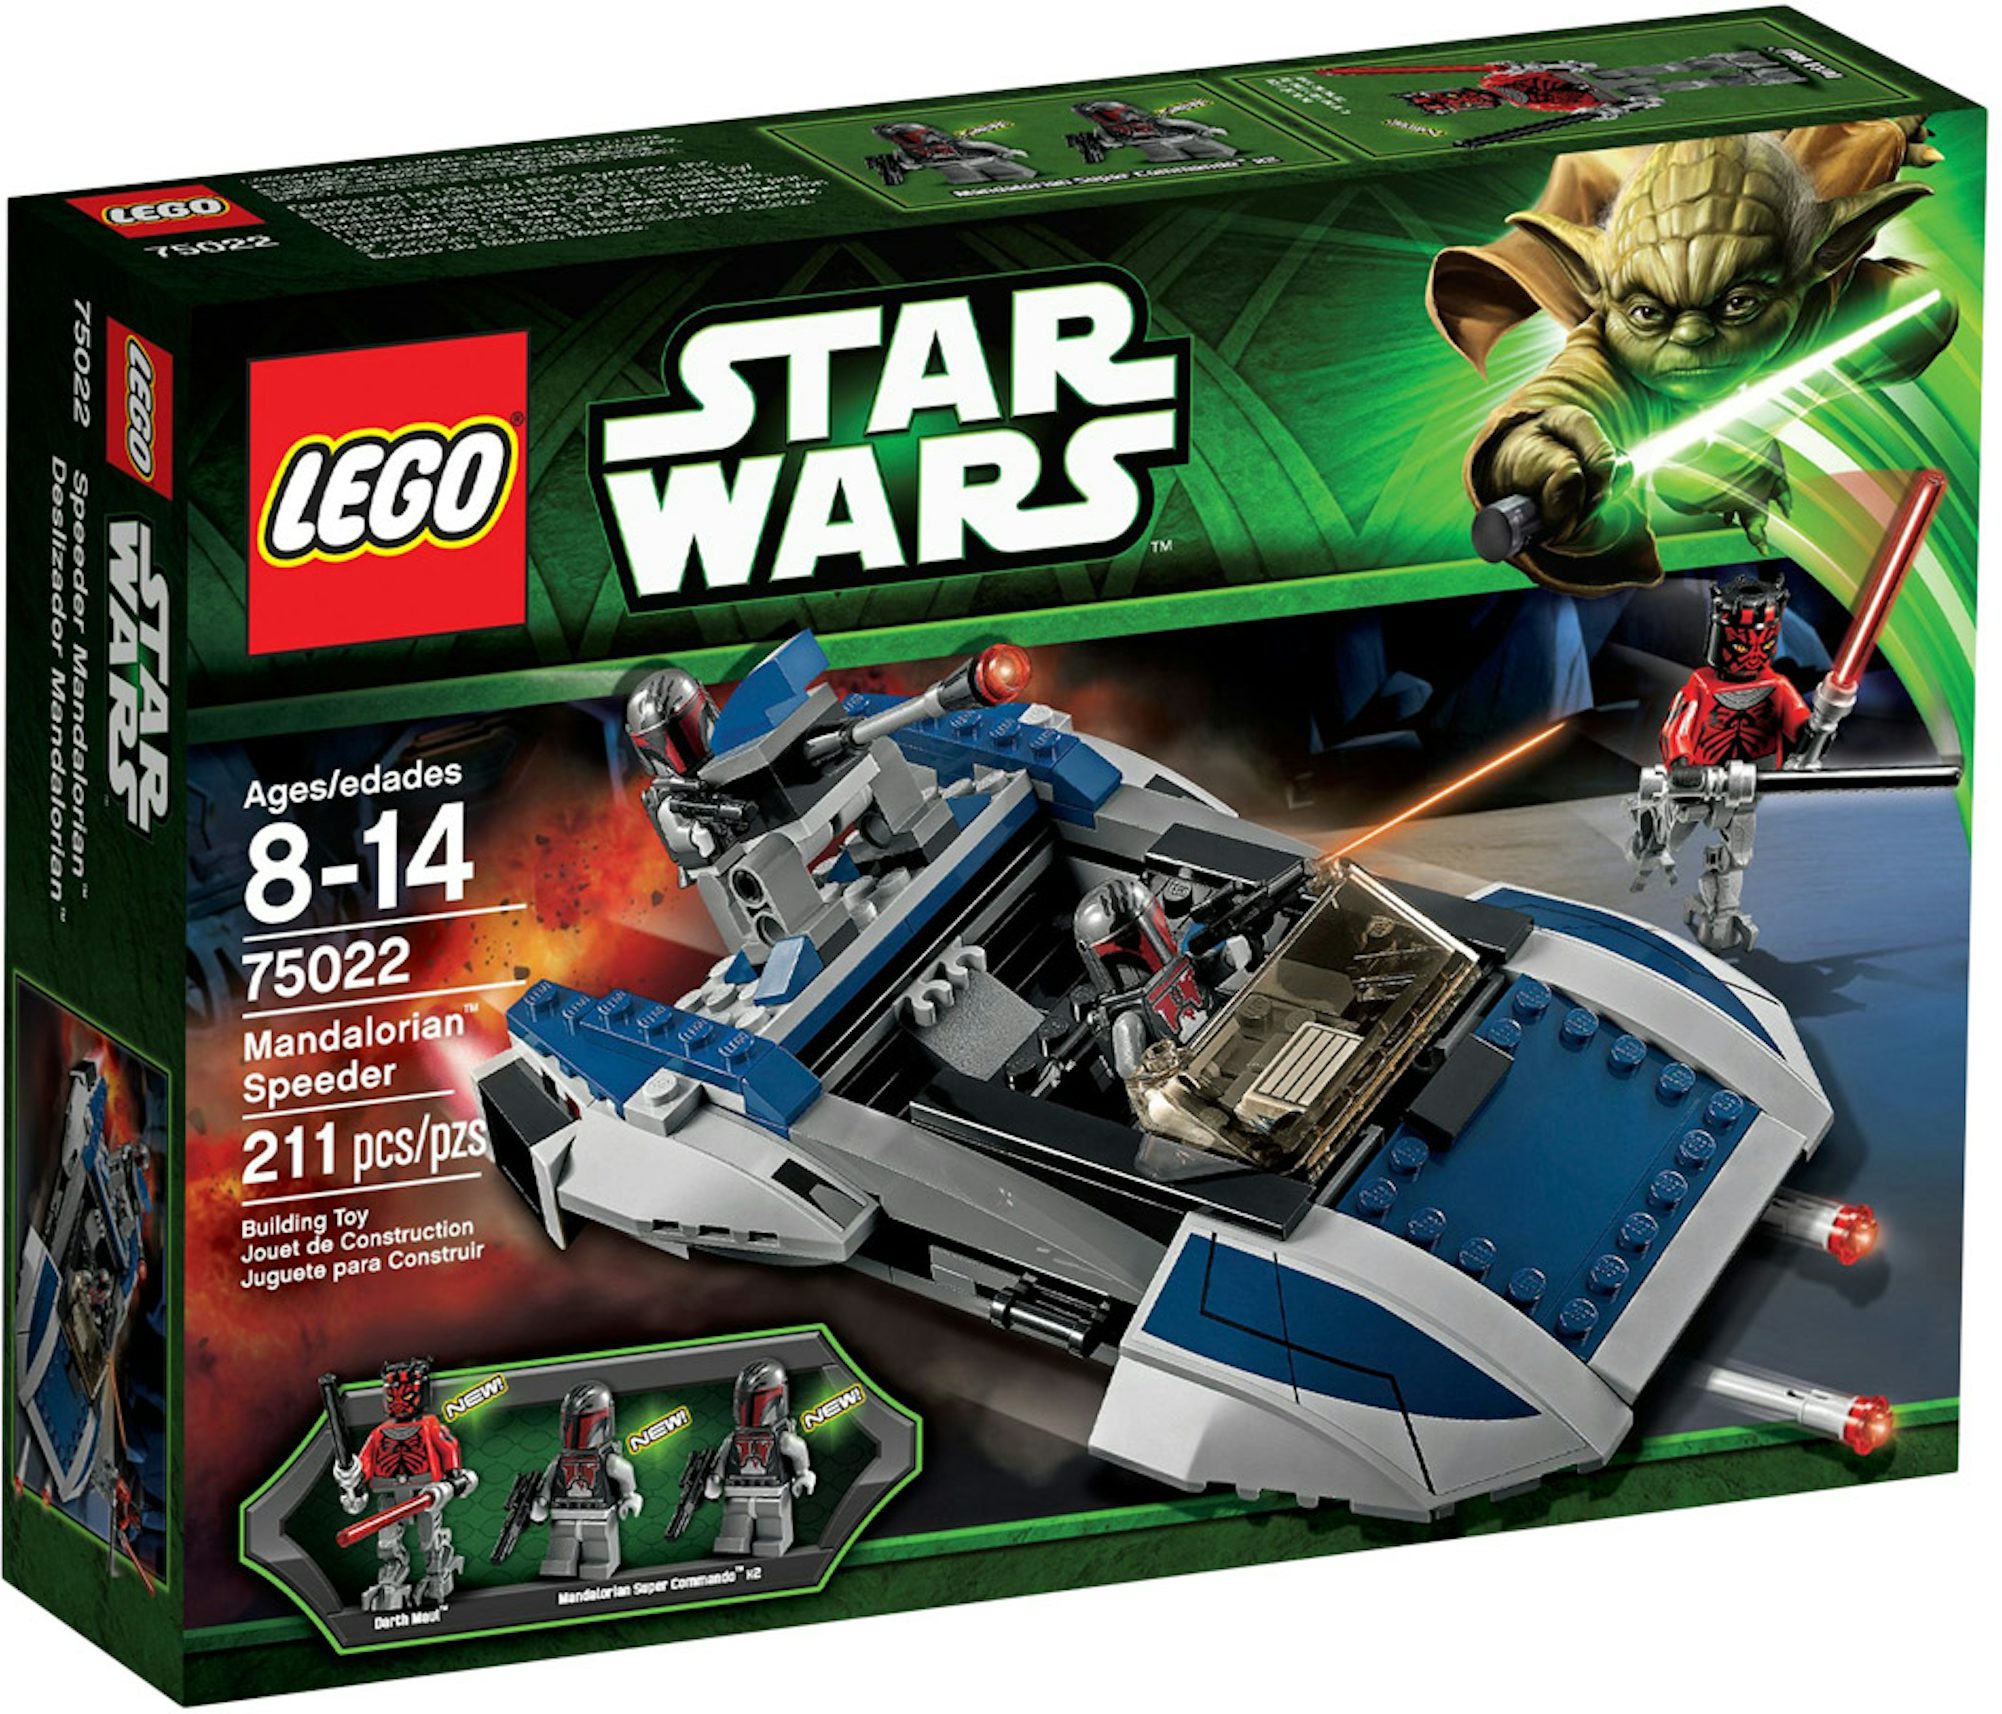 LEGO Star Wars Mandalorian Speeder Set 75022 - IT